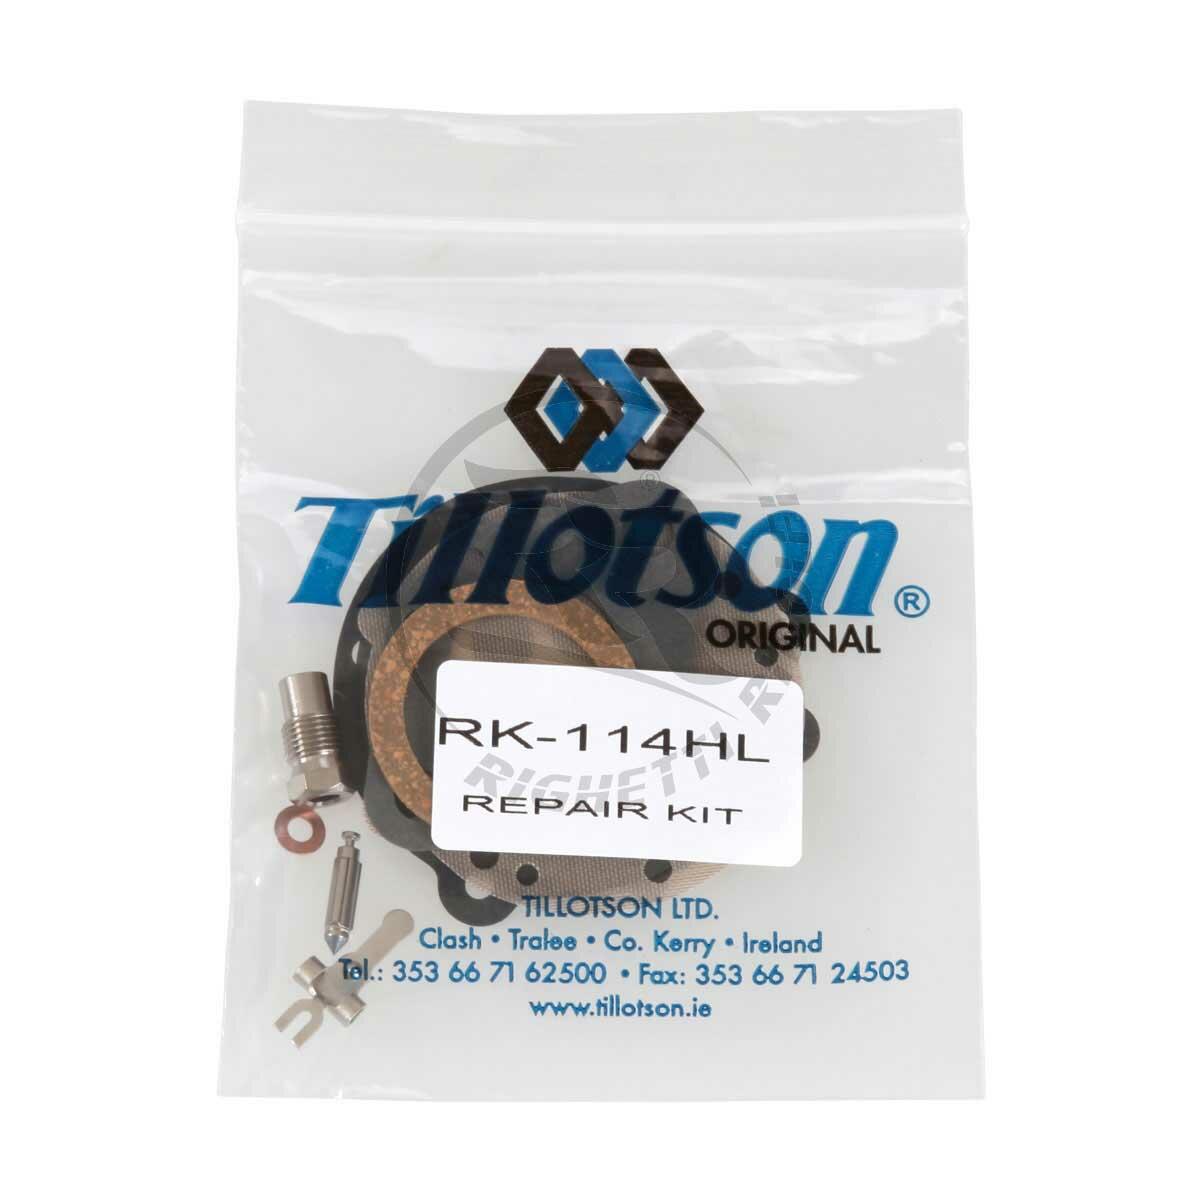 Picture of Repair Kit for Tillotson HL166 RK-114HL